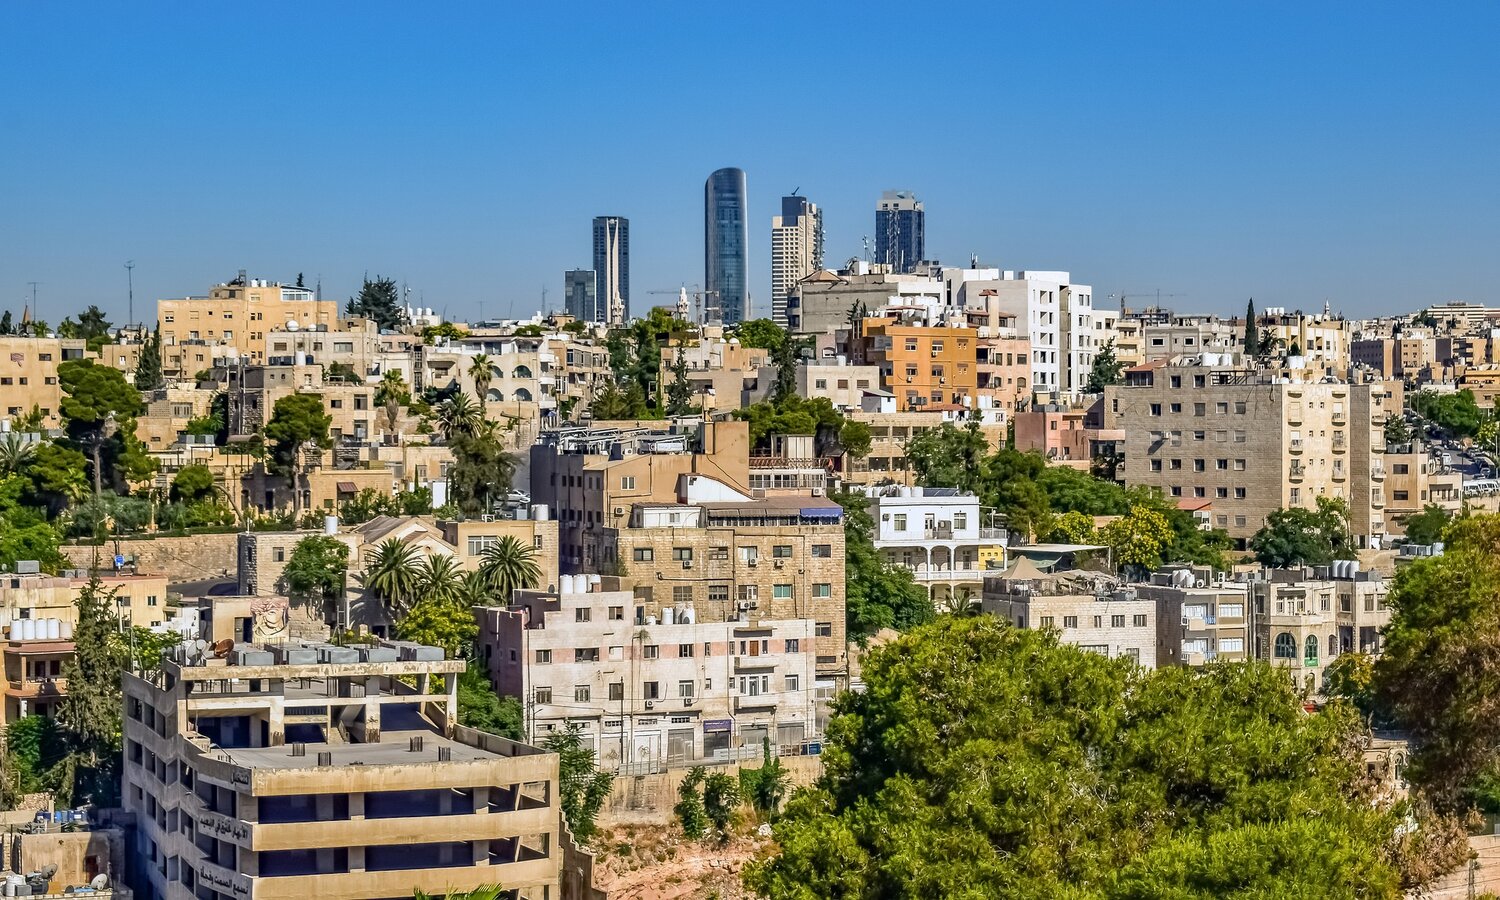 trofast Vend tilbage tæppe Amman, Jordan — GrowthWheel